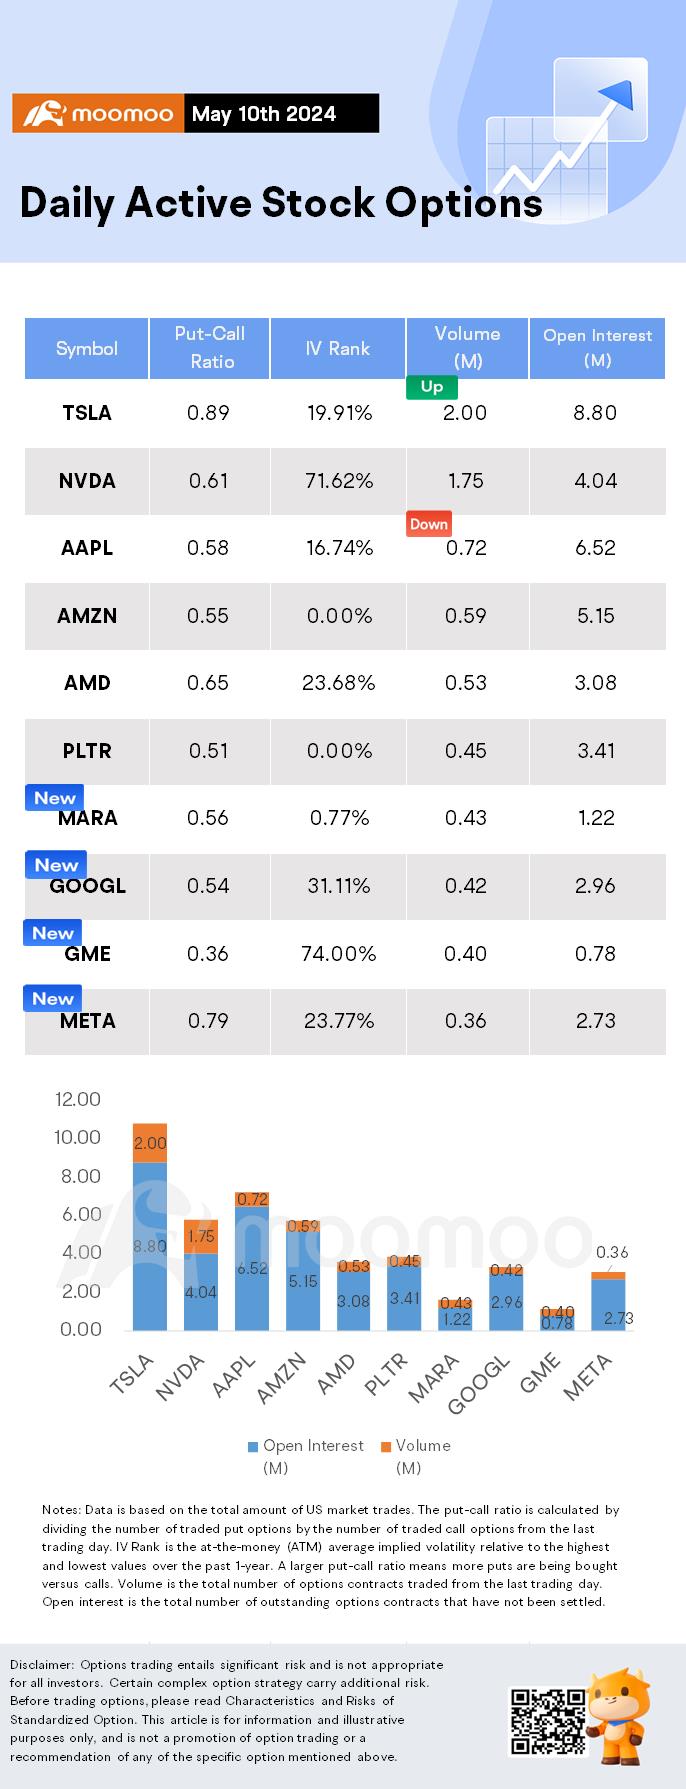 Options Market Statistics: Marathon Digital Shares Drop 12.67%, Analysts Lower Price Target, Options Pop